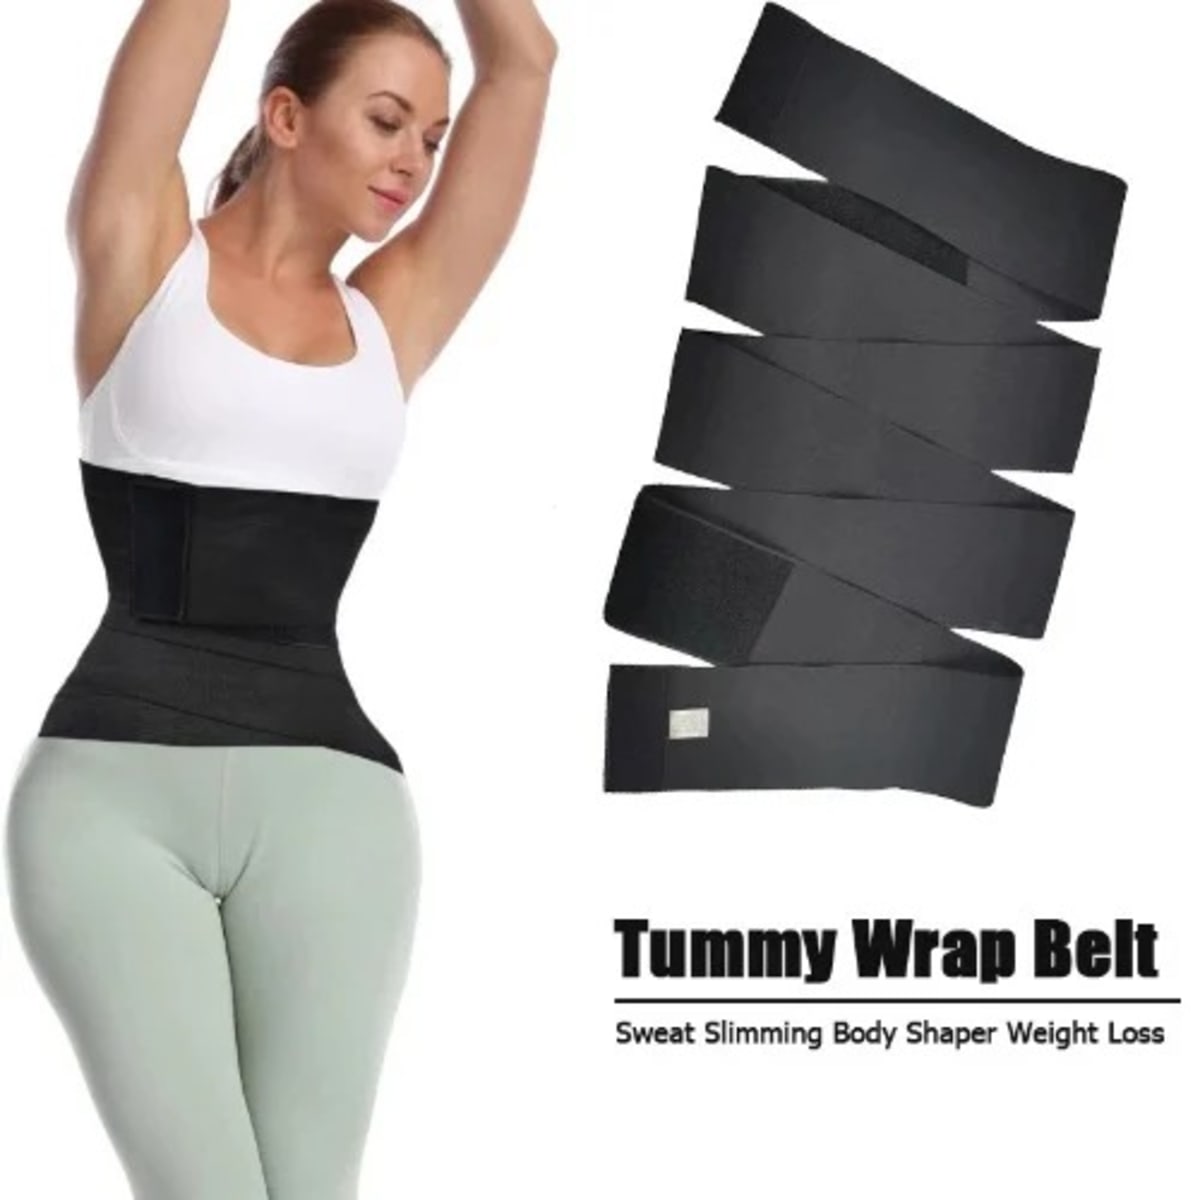 Tummy Wrap Belt